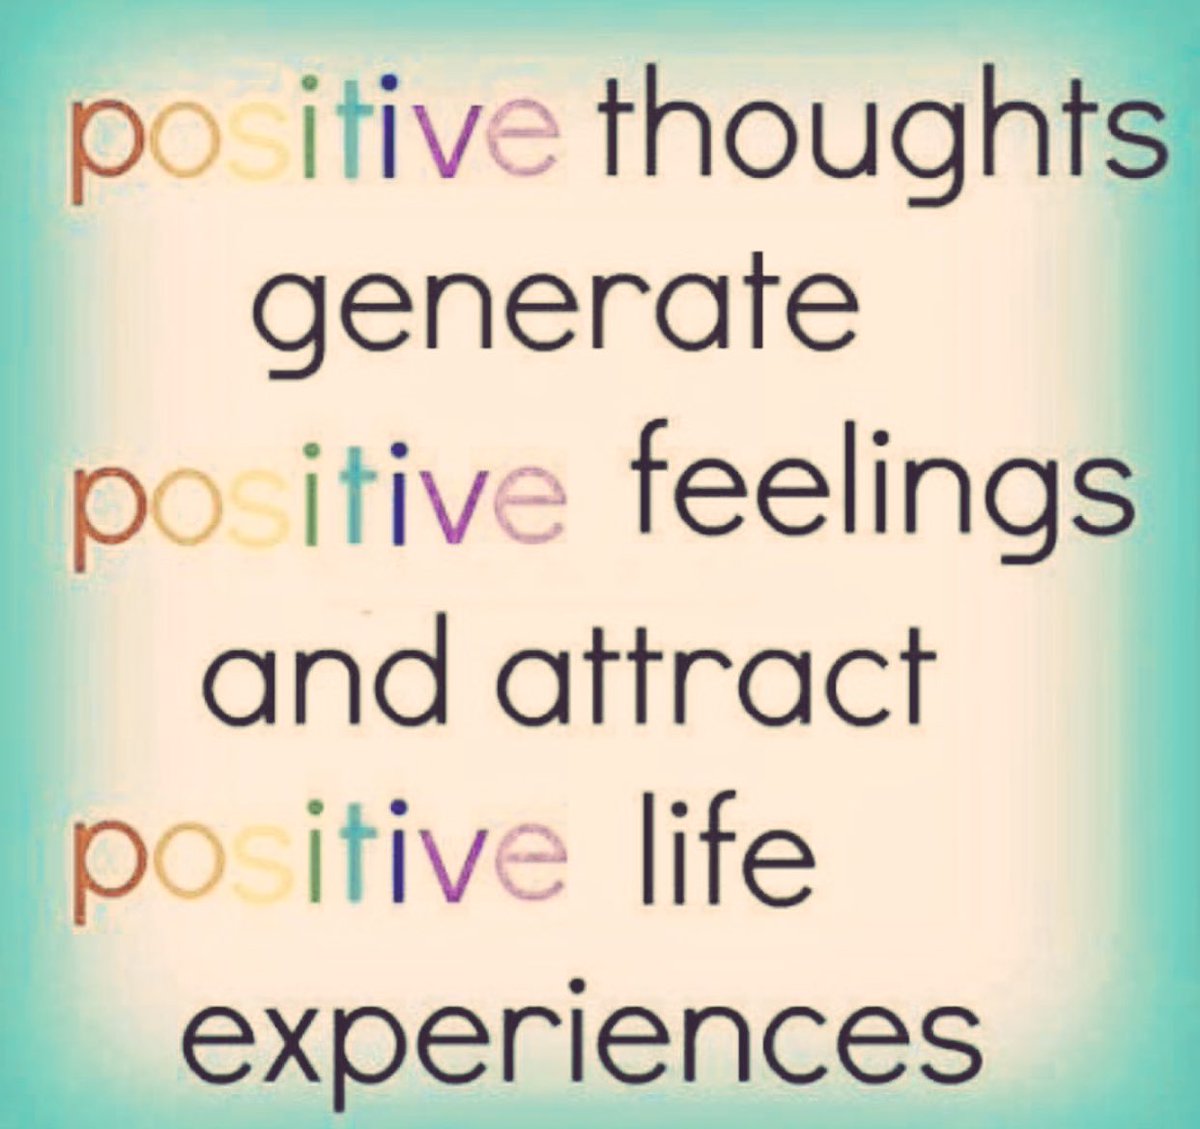 #PositiveThoughts #PositiveFeelings = #PositiveLifeExperience #CarlaTexRealtor #ThinkBIGSundayWithMarsha